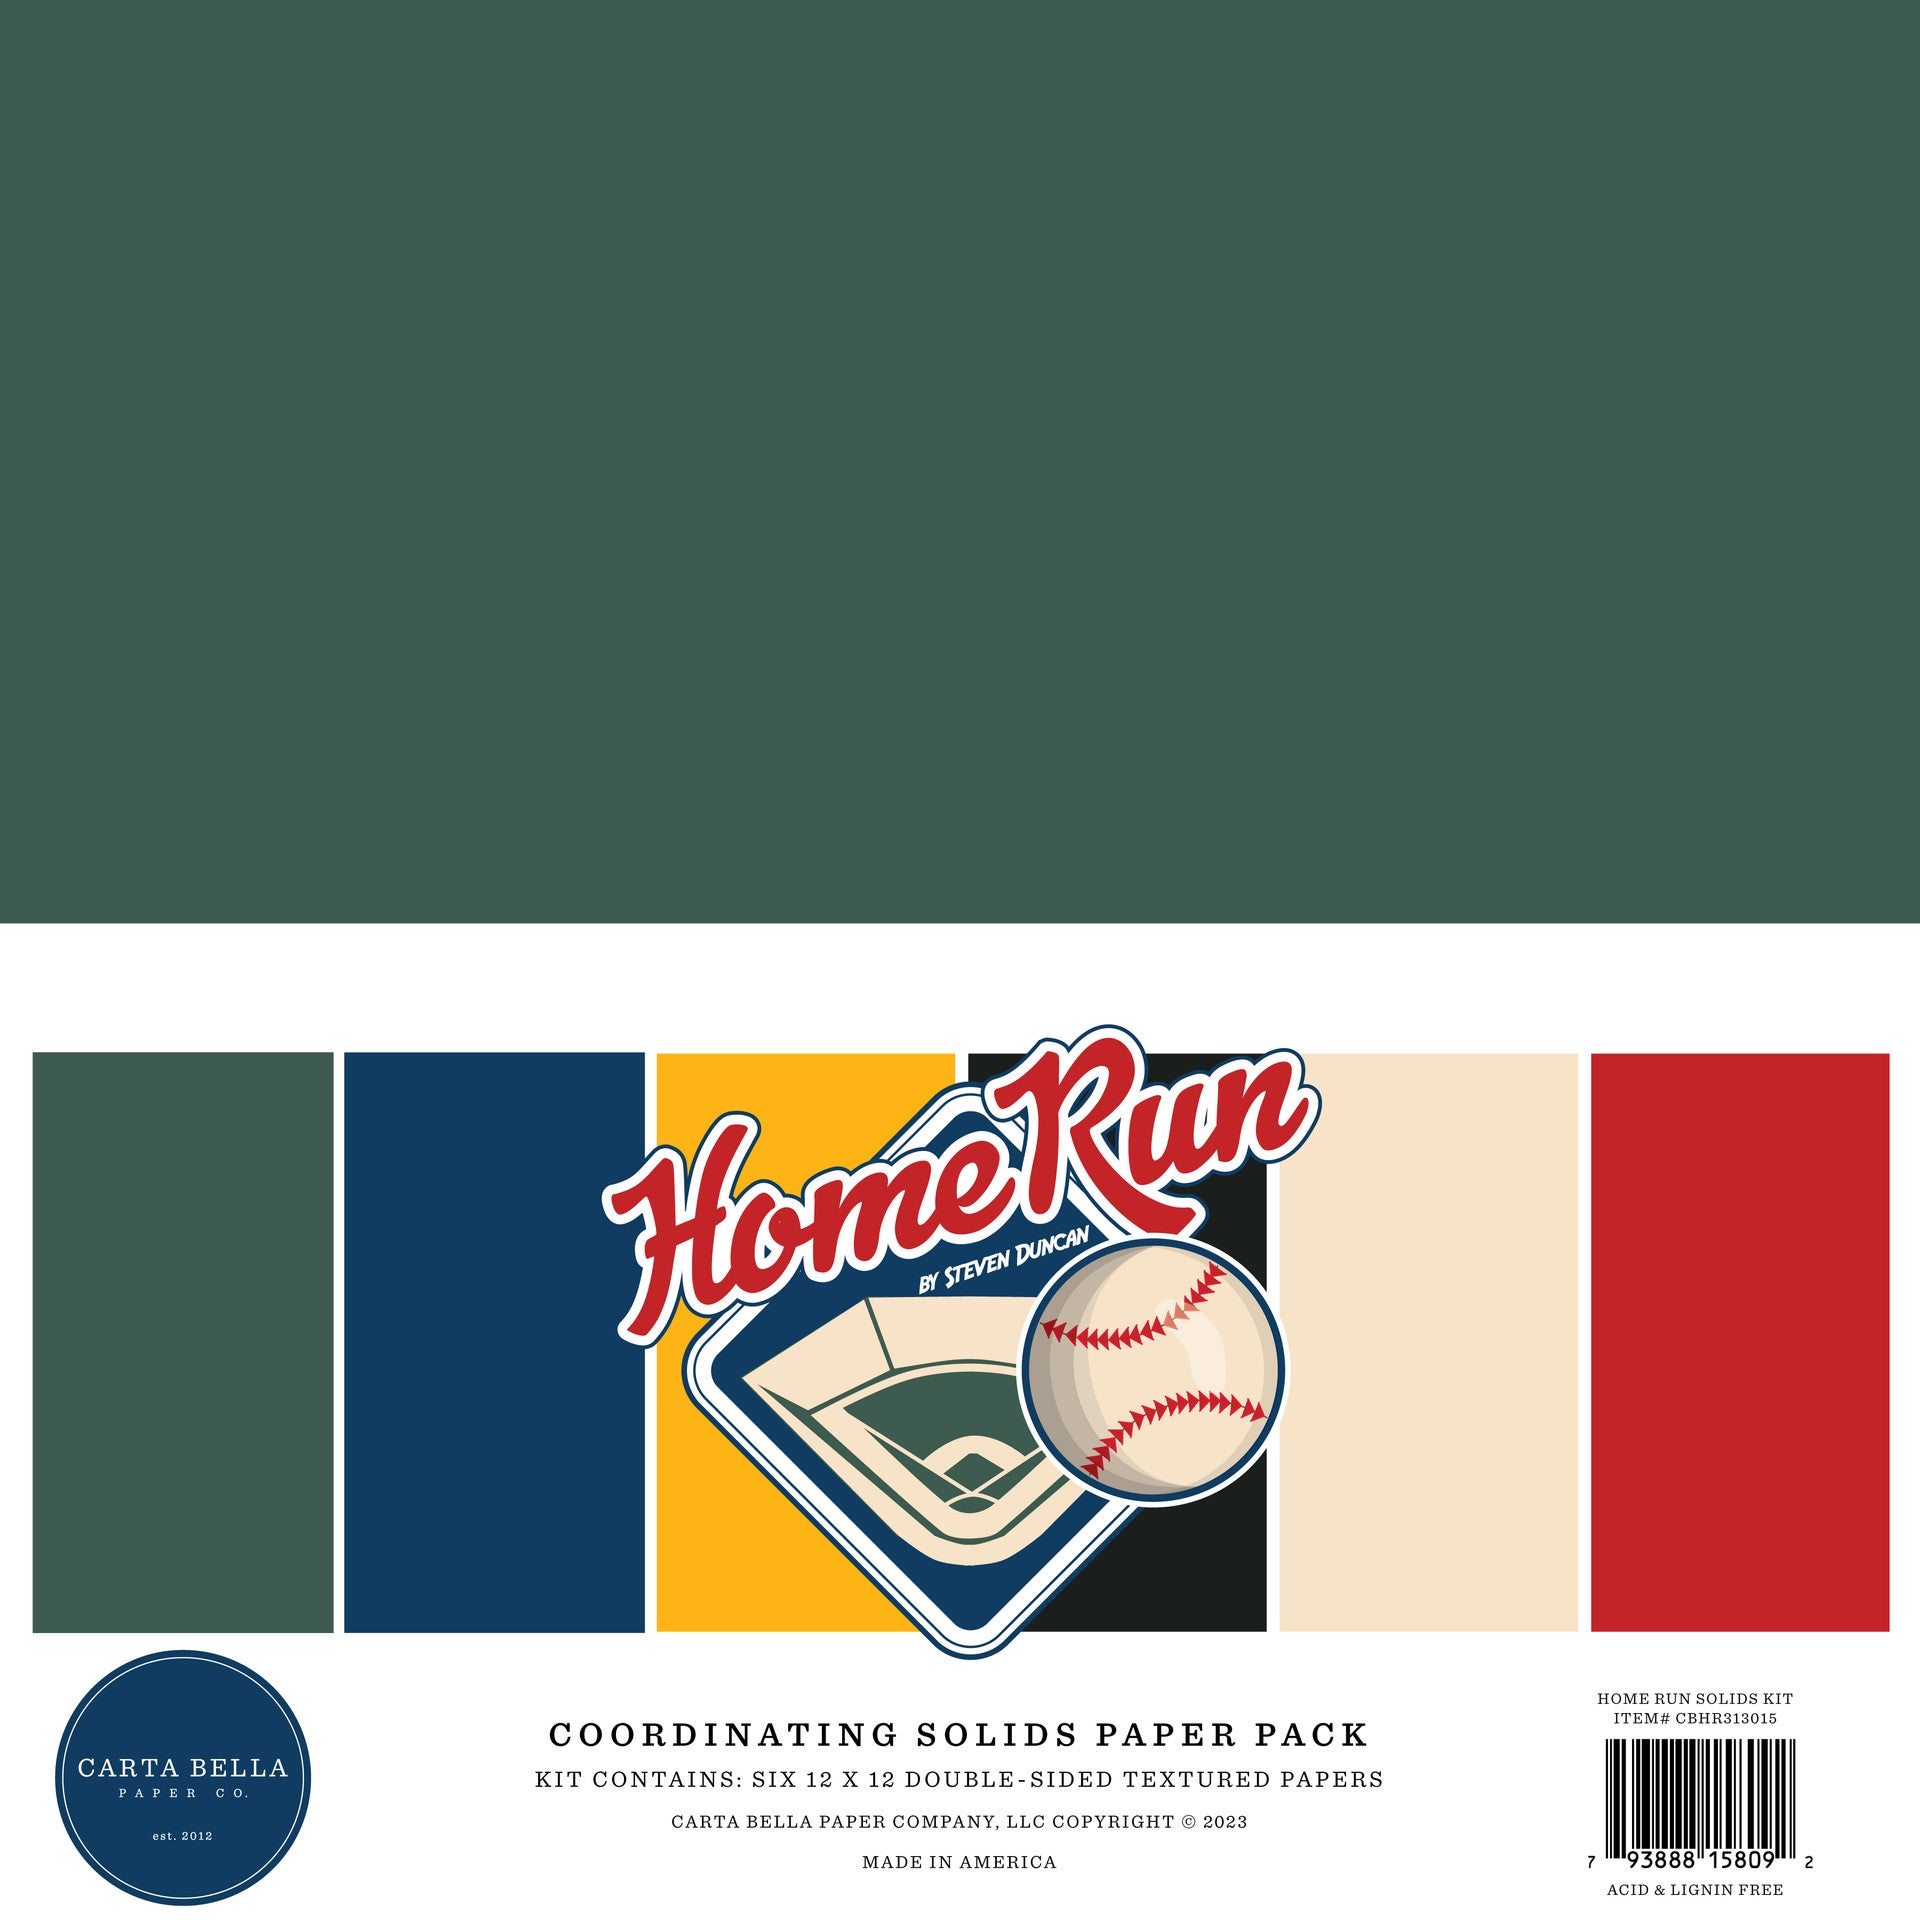 Home Run Solids Kit